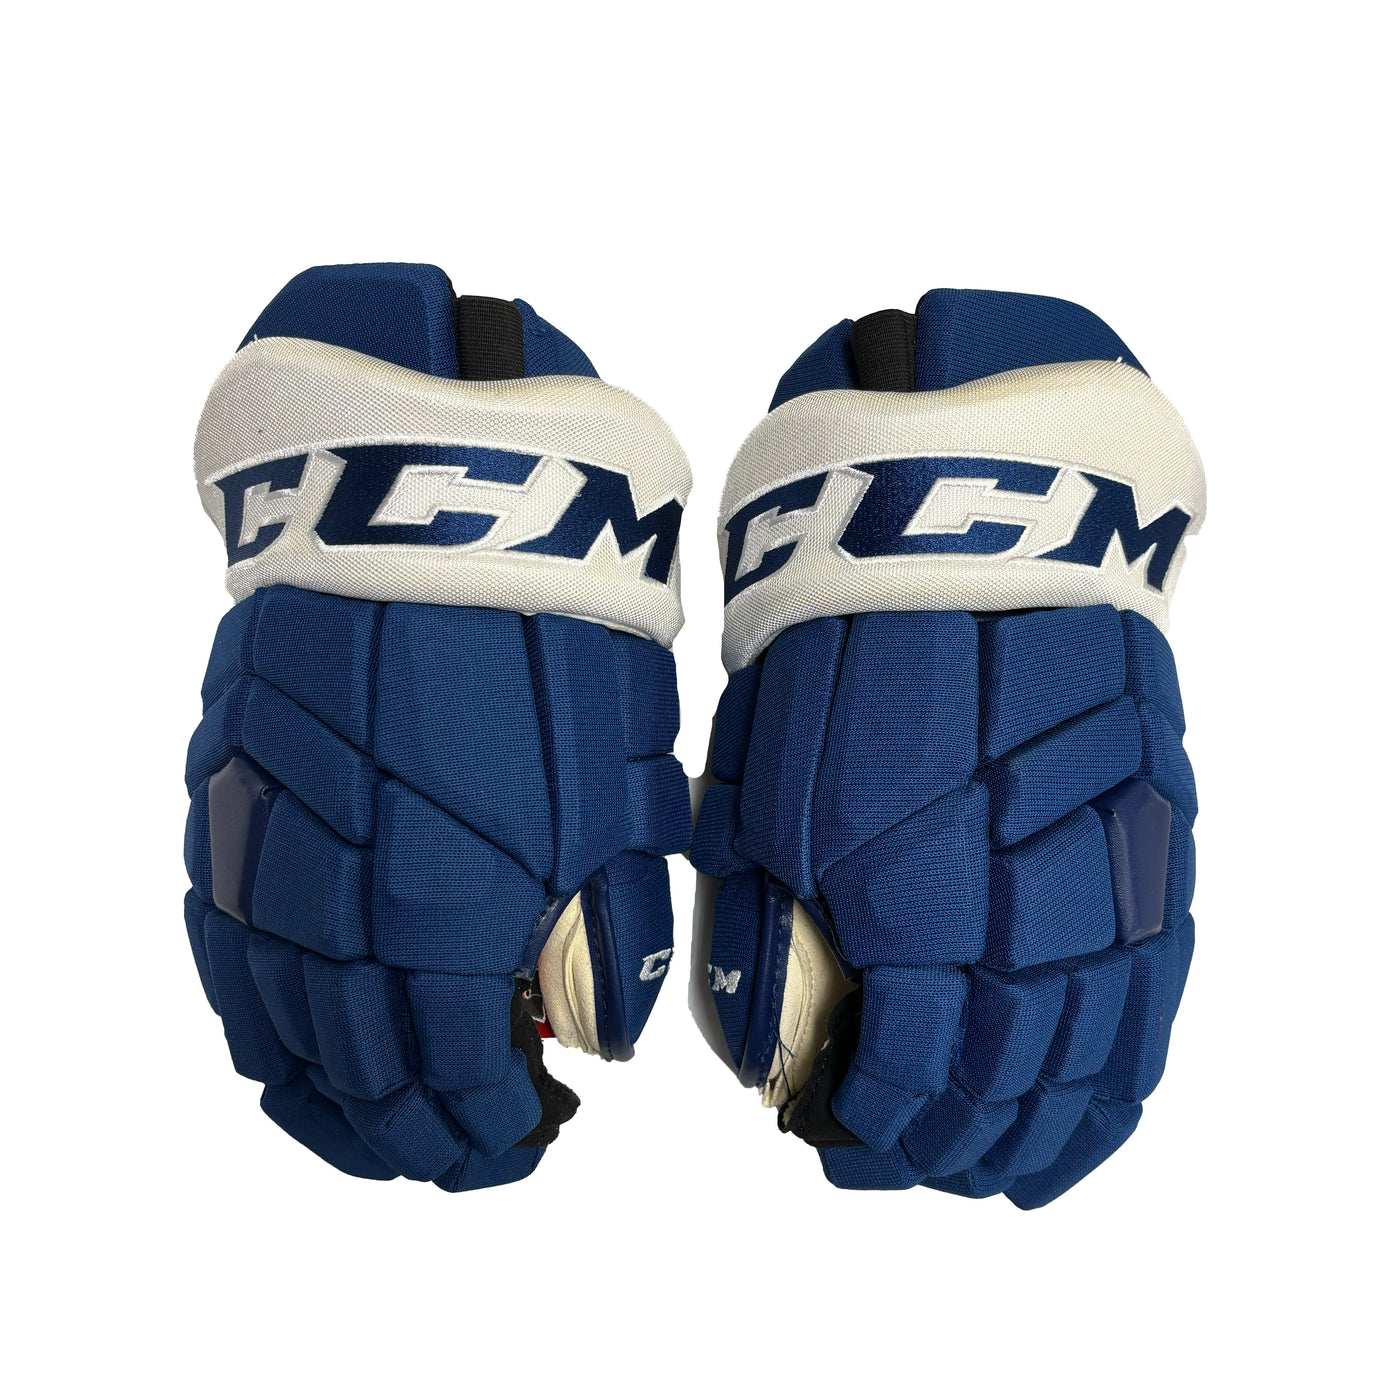 CCM HGTK - Pro Stock Hockey Gloves - Toronto Maple Leafs - Nazem Kadri